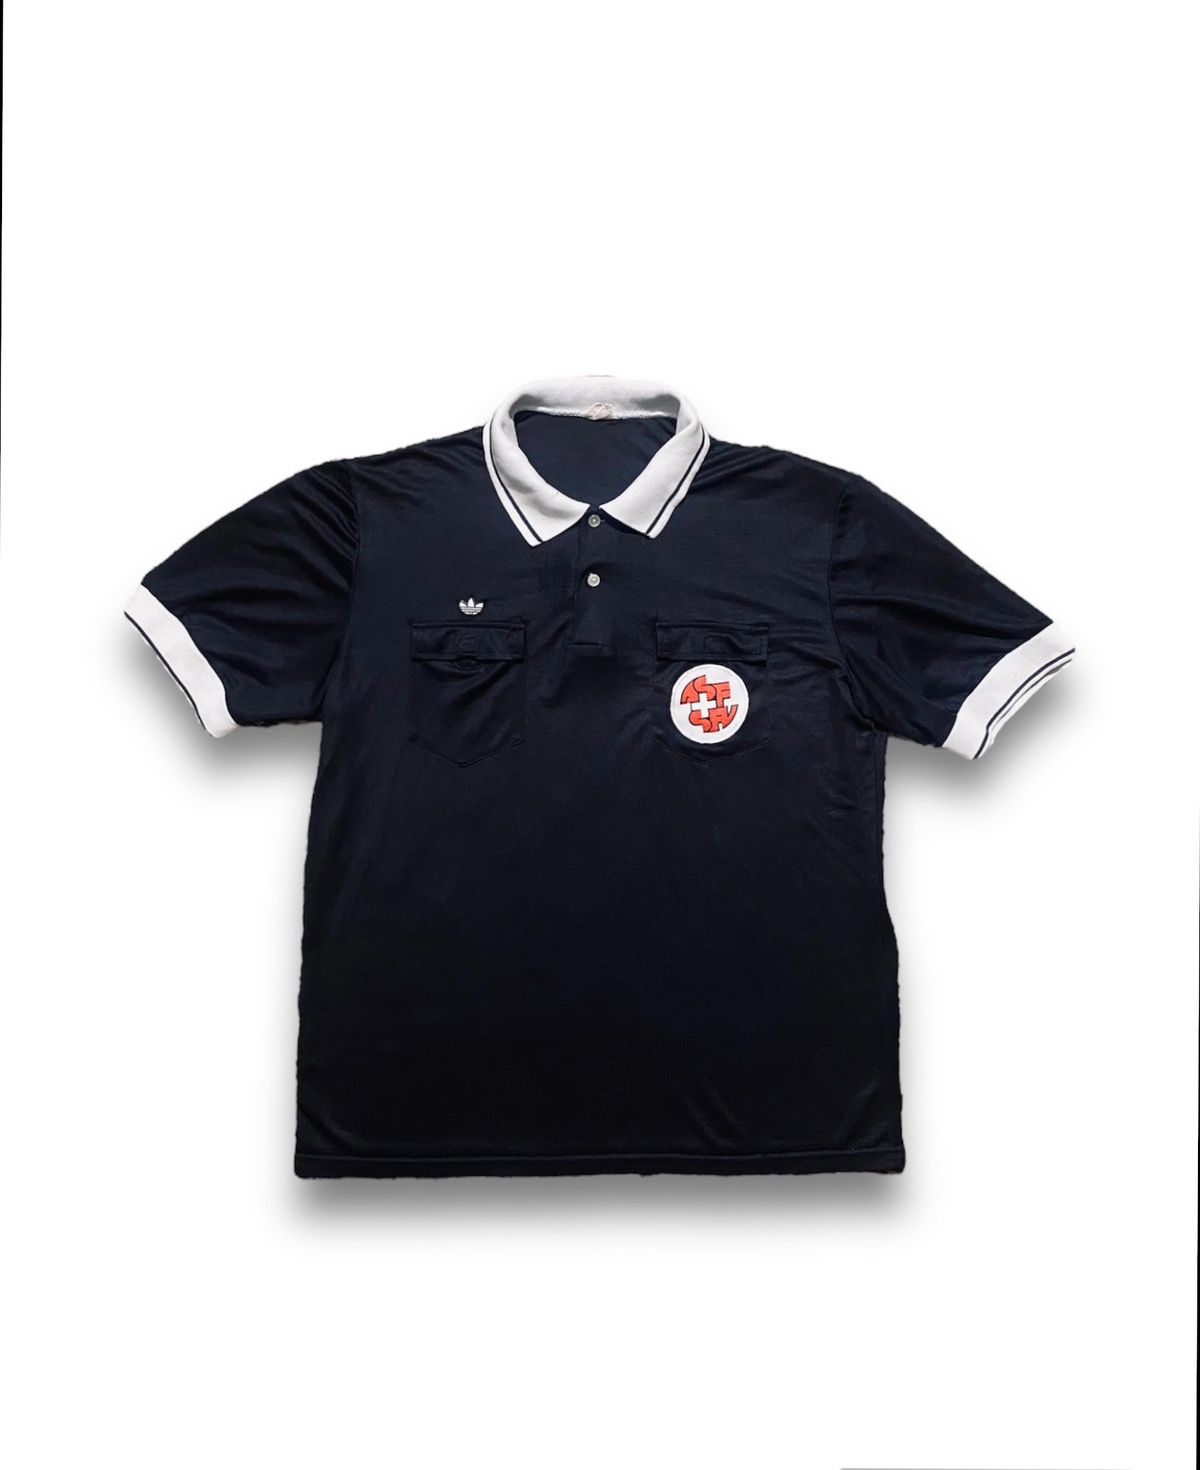 Vintage Adidas Referee Shirt Jersey Switzerland Nation Team - 1